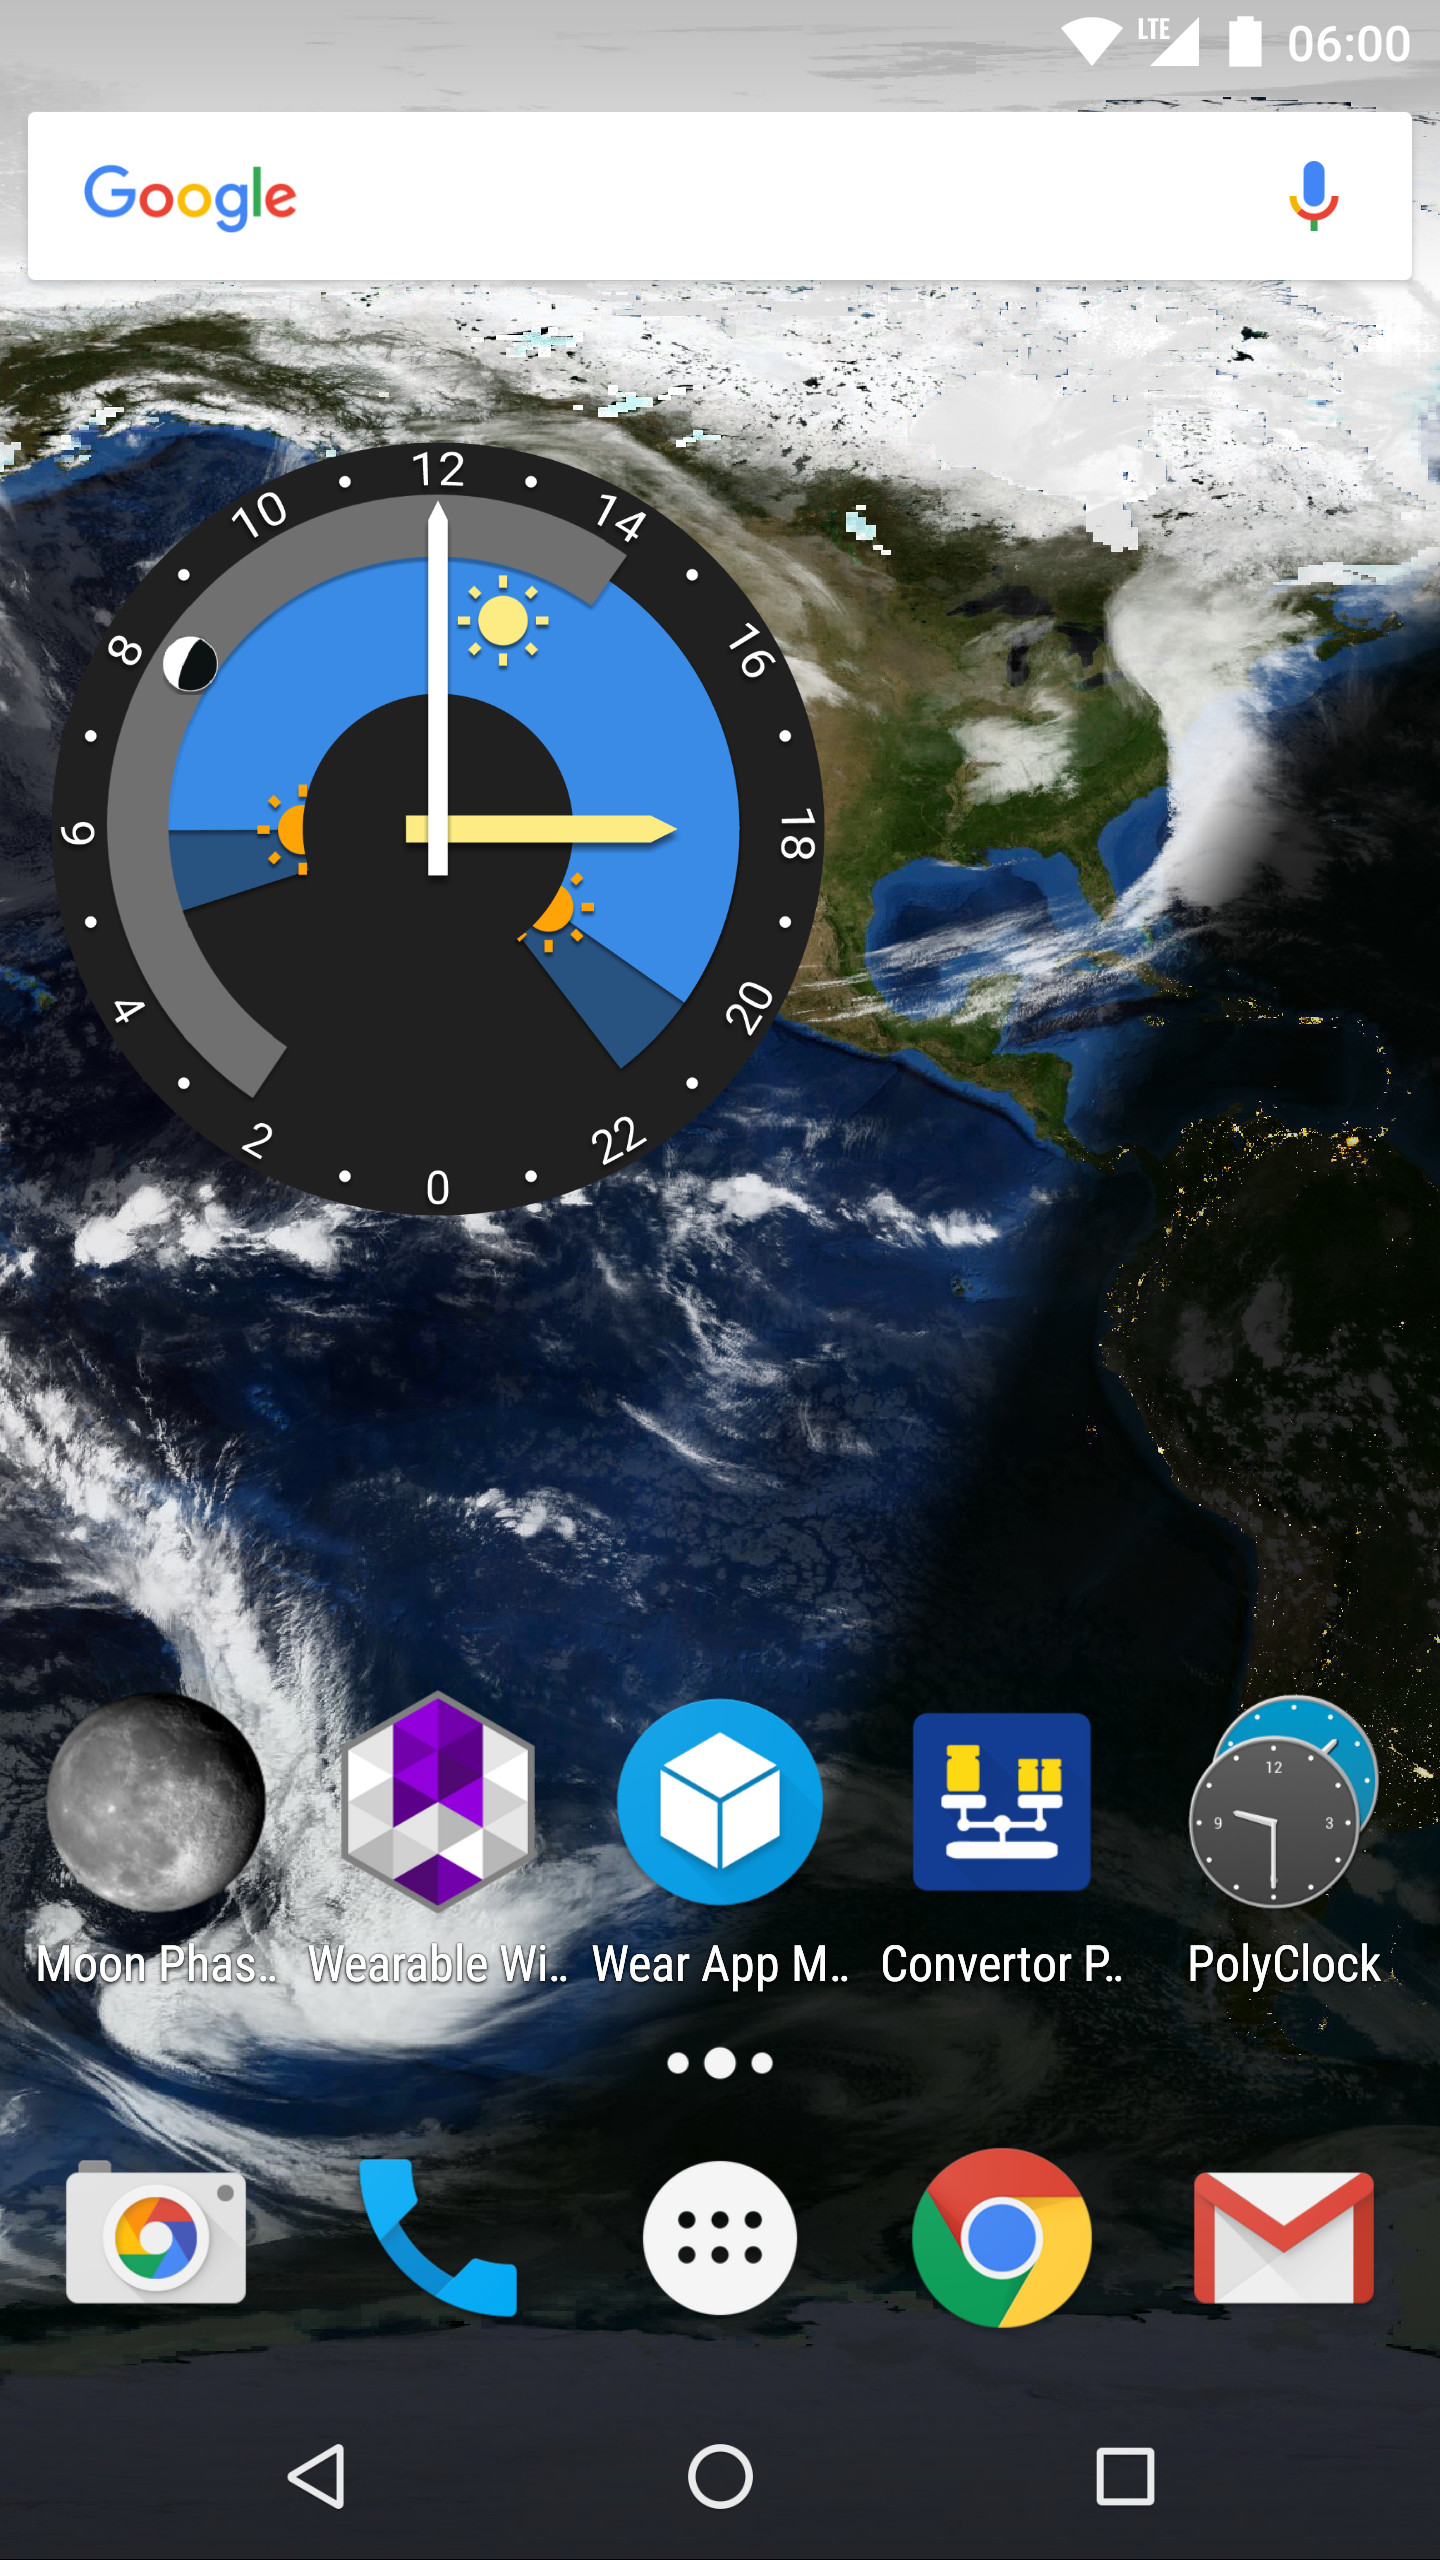 screenshot of terratime map on Nexus 5